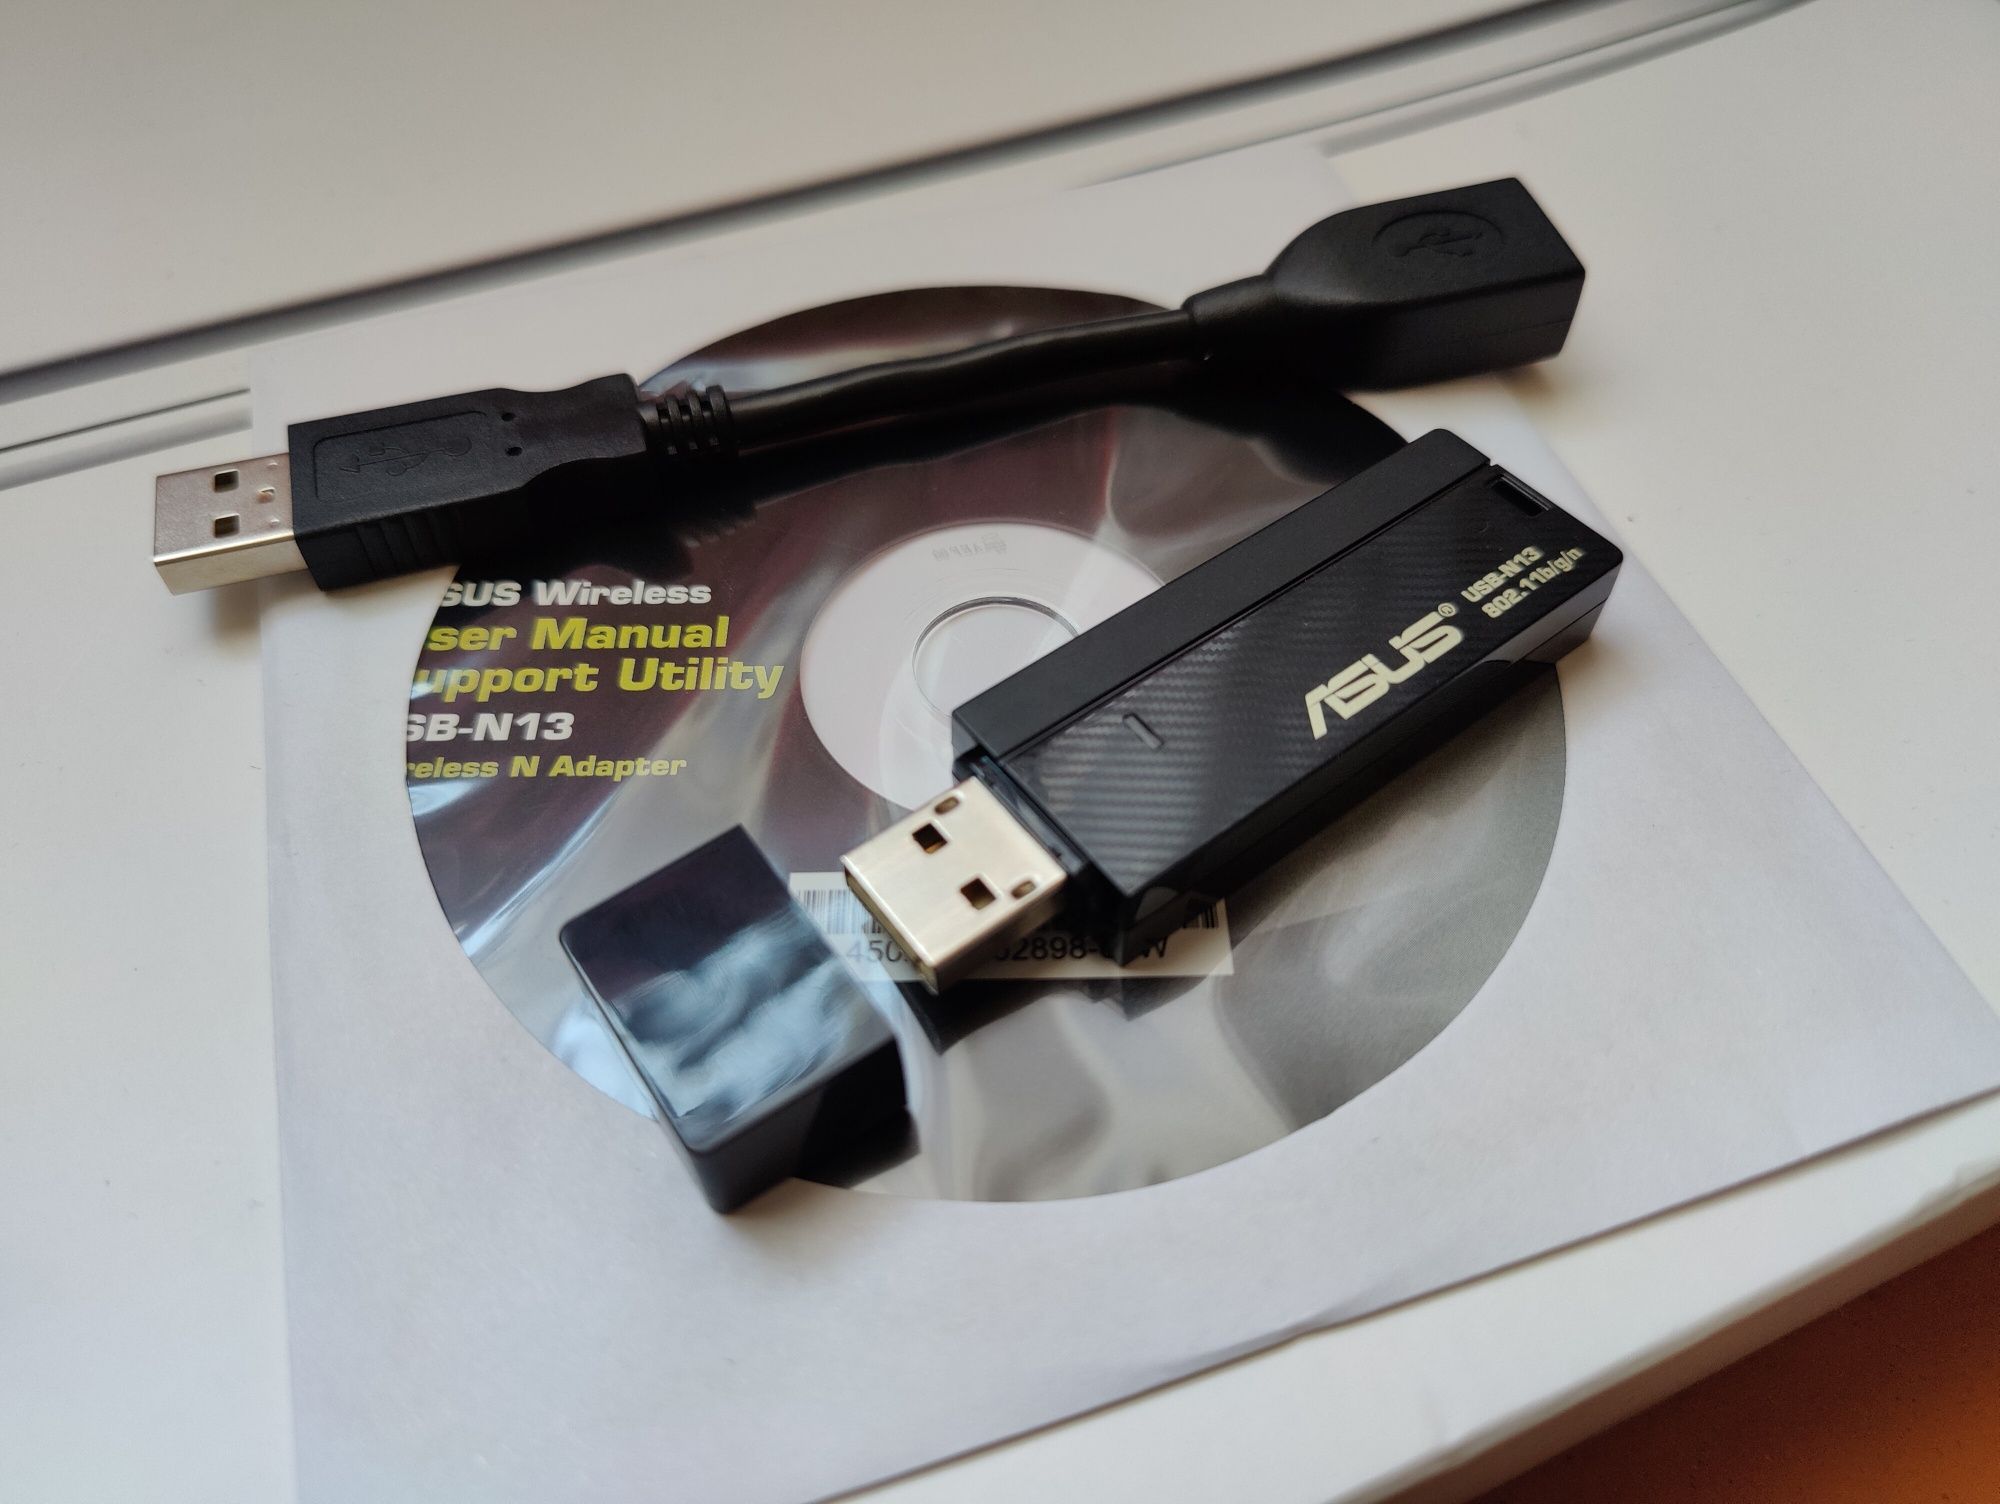 Сетевой адаптер ASUS USB-N13